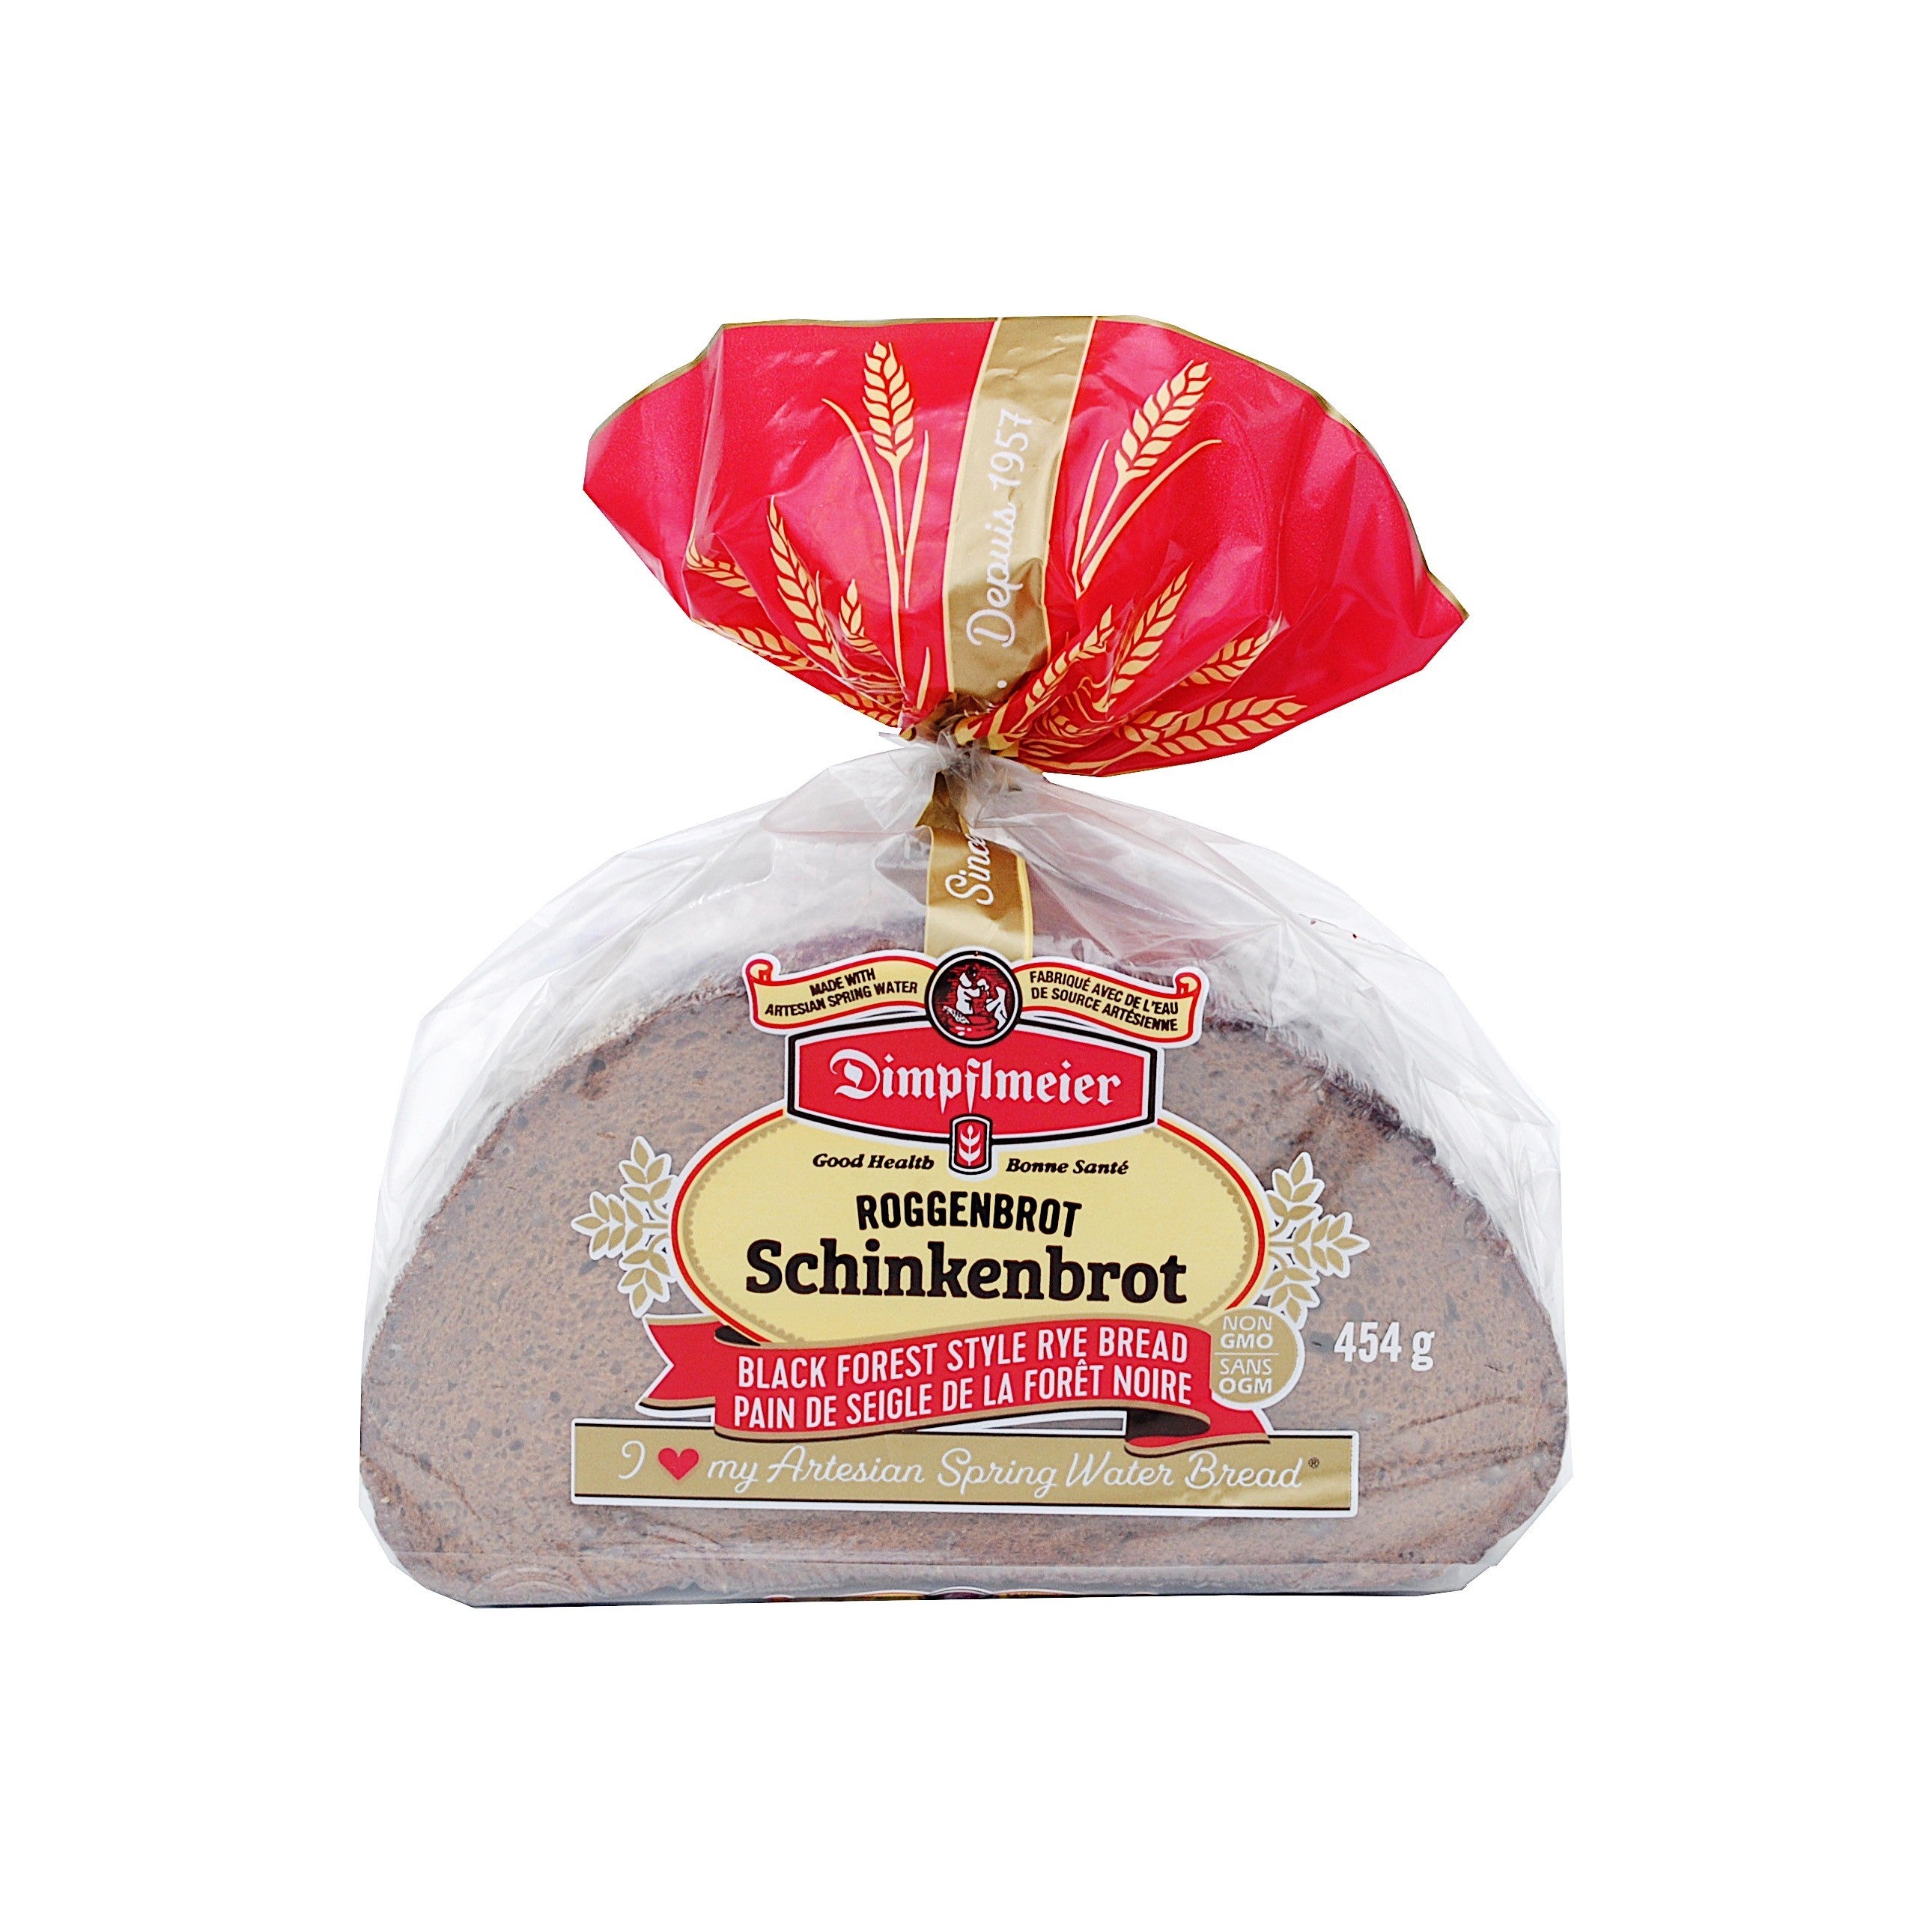 Schinkenbrot-Black Forest Style Rye Bread